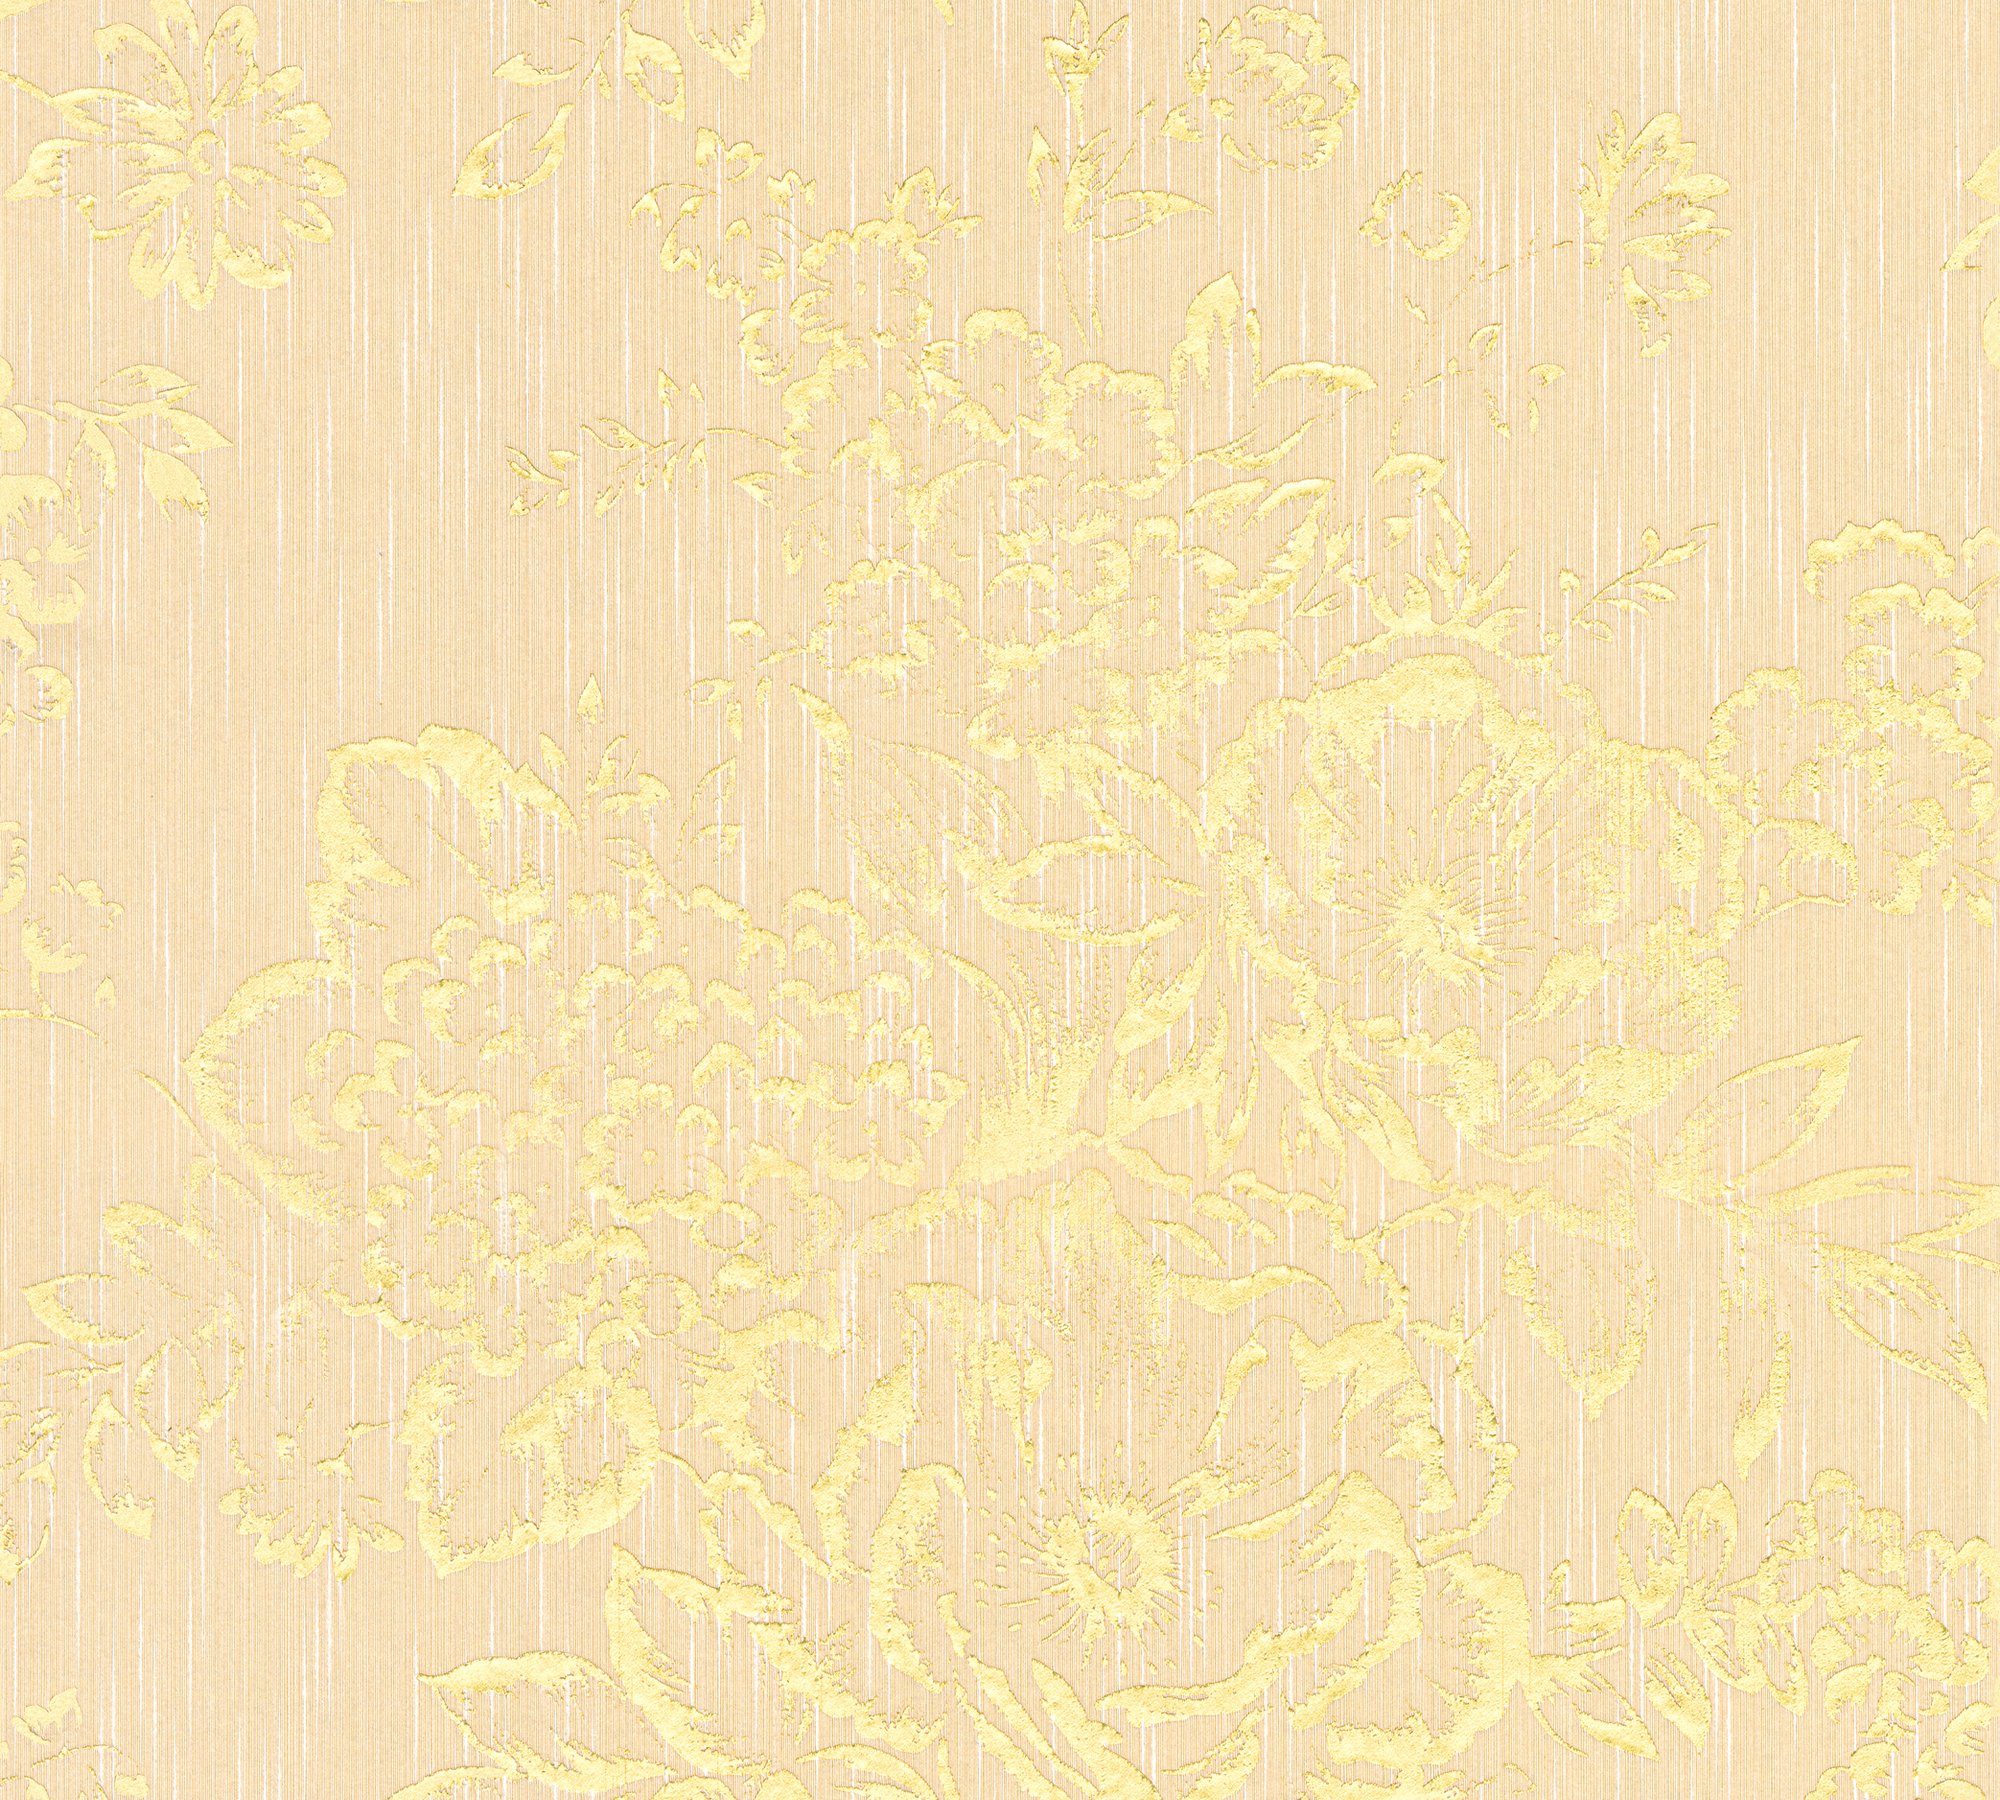 Barocktapete floral, matt, Textiltapete Blumen Silk, Tapete Création Paper gold/creme glänzend, Metallic Architects A.S. samtig,